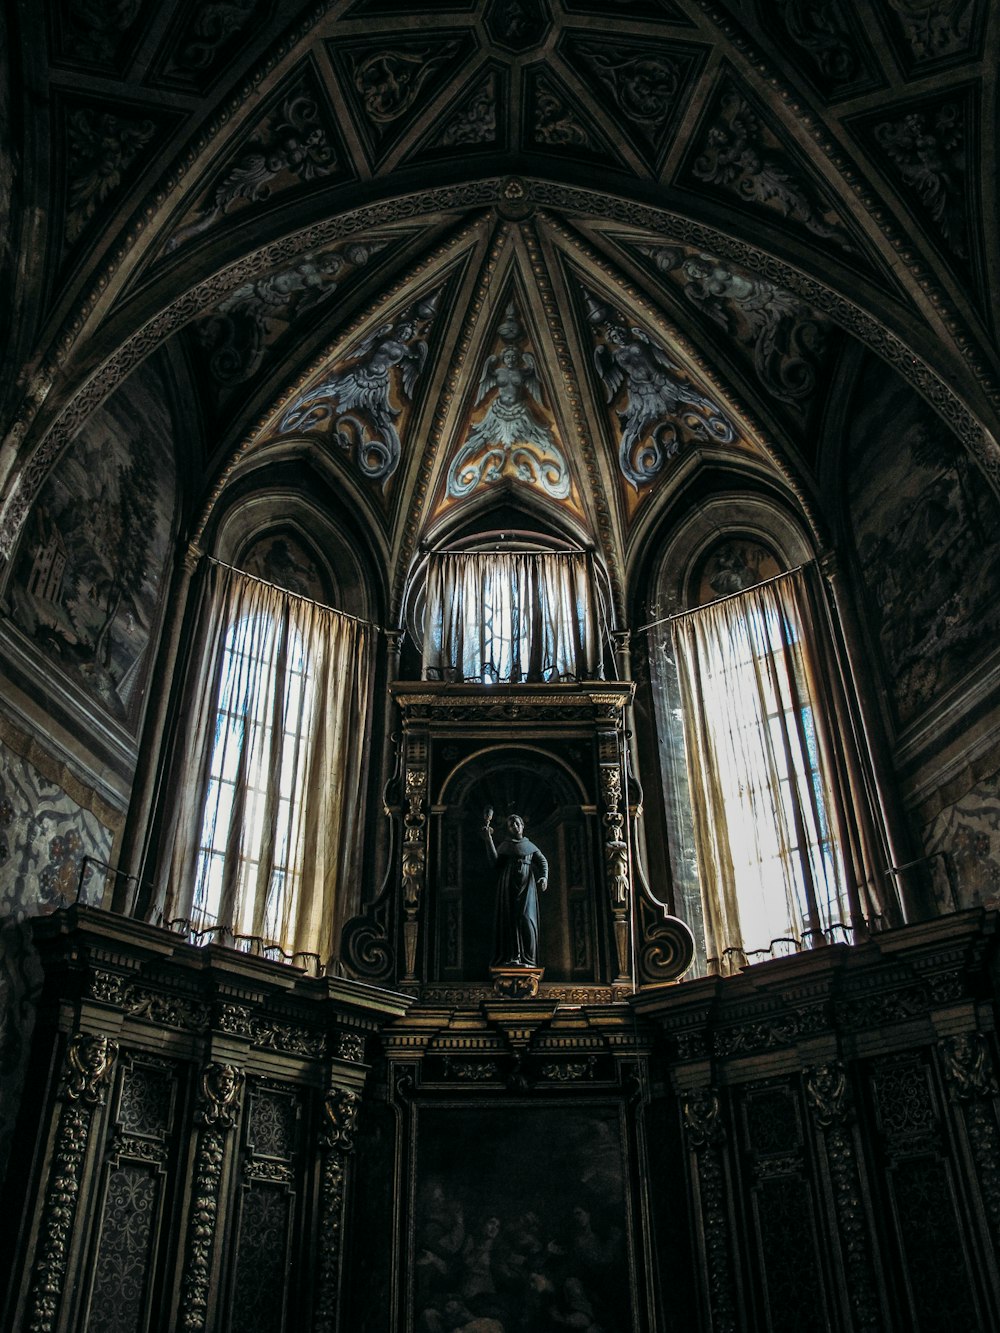 church interior showing statue